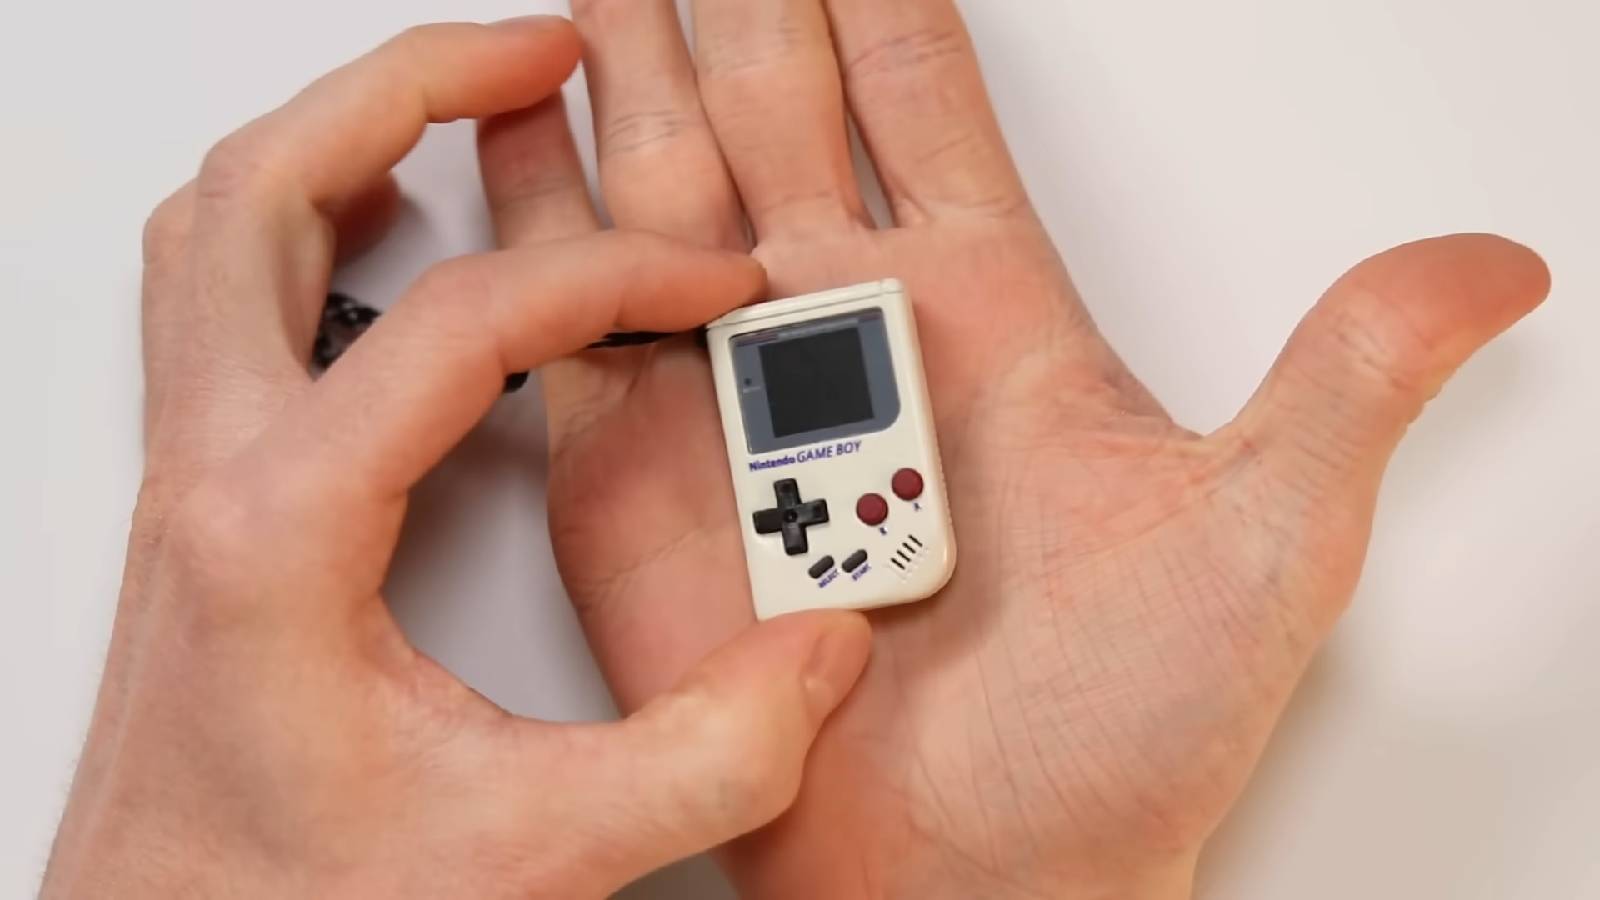 Miniature Game Boy